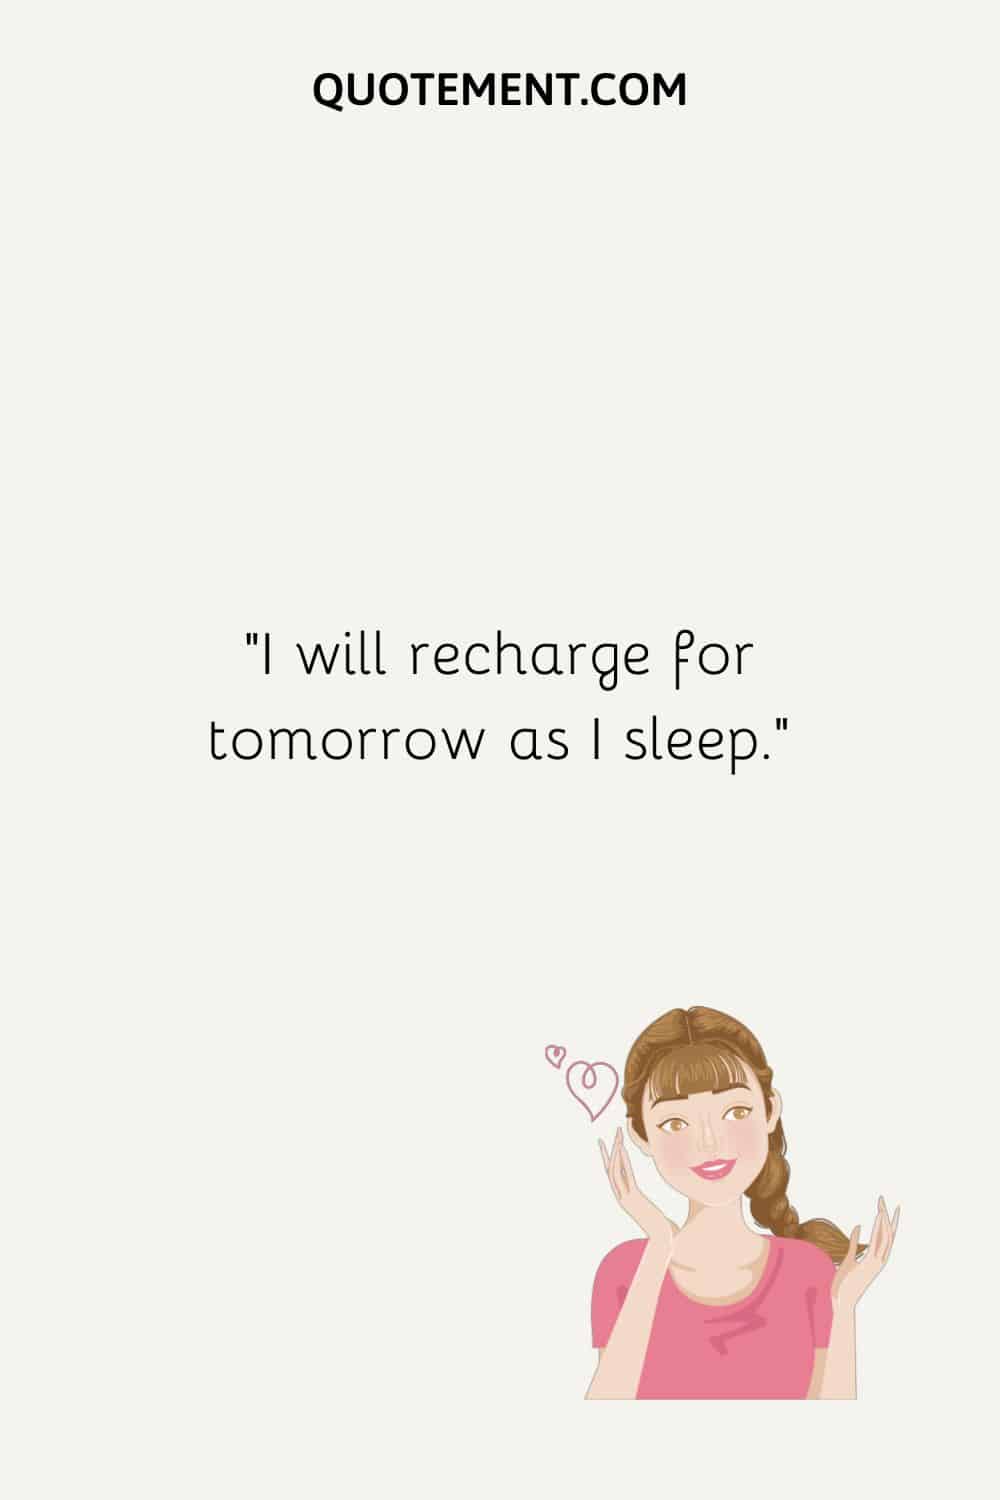 I will recharge for tomorrow as I sleep